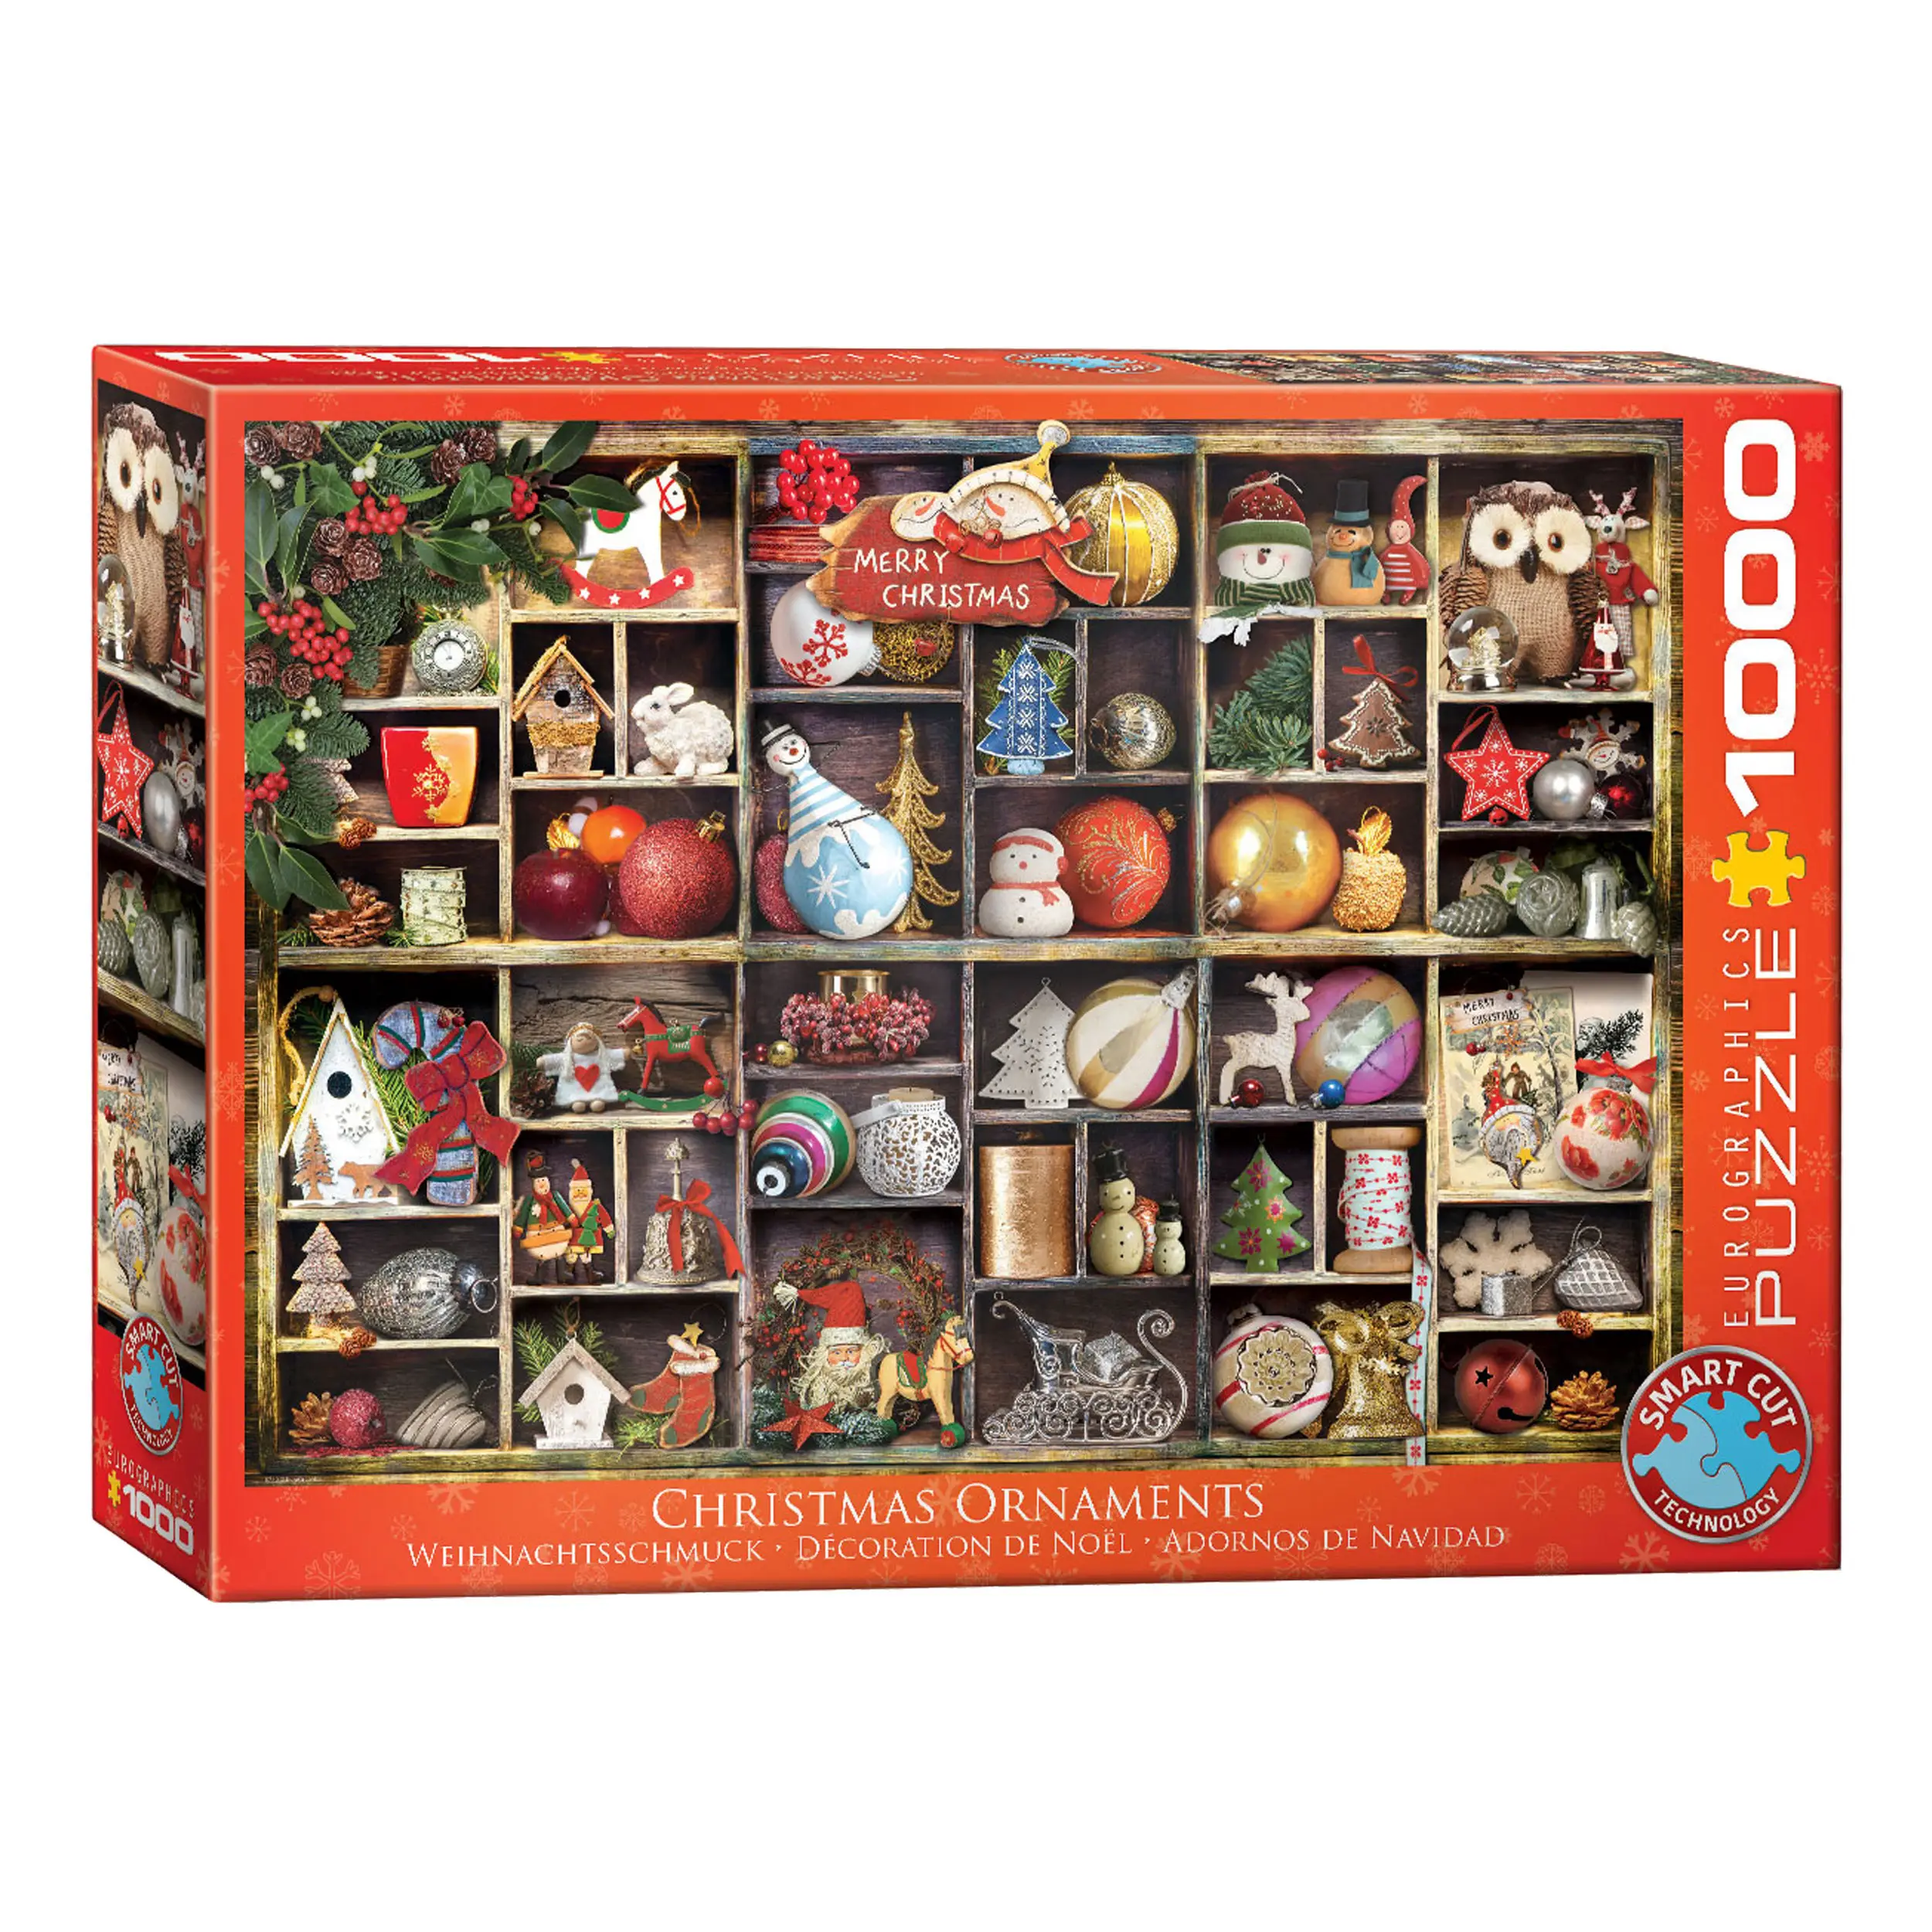 Puzzle Weihnachtsornamente 1000 Teile